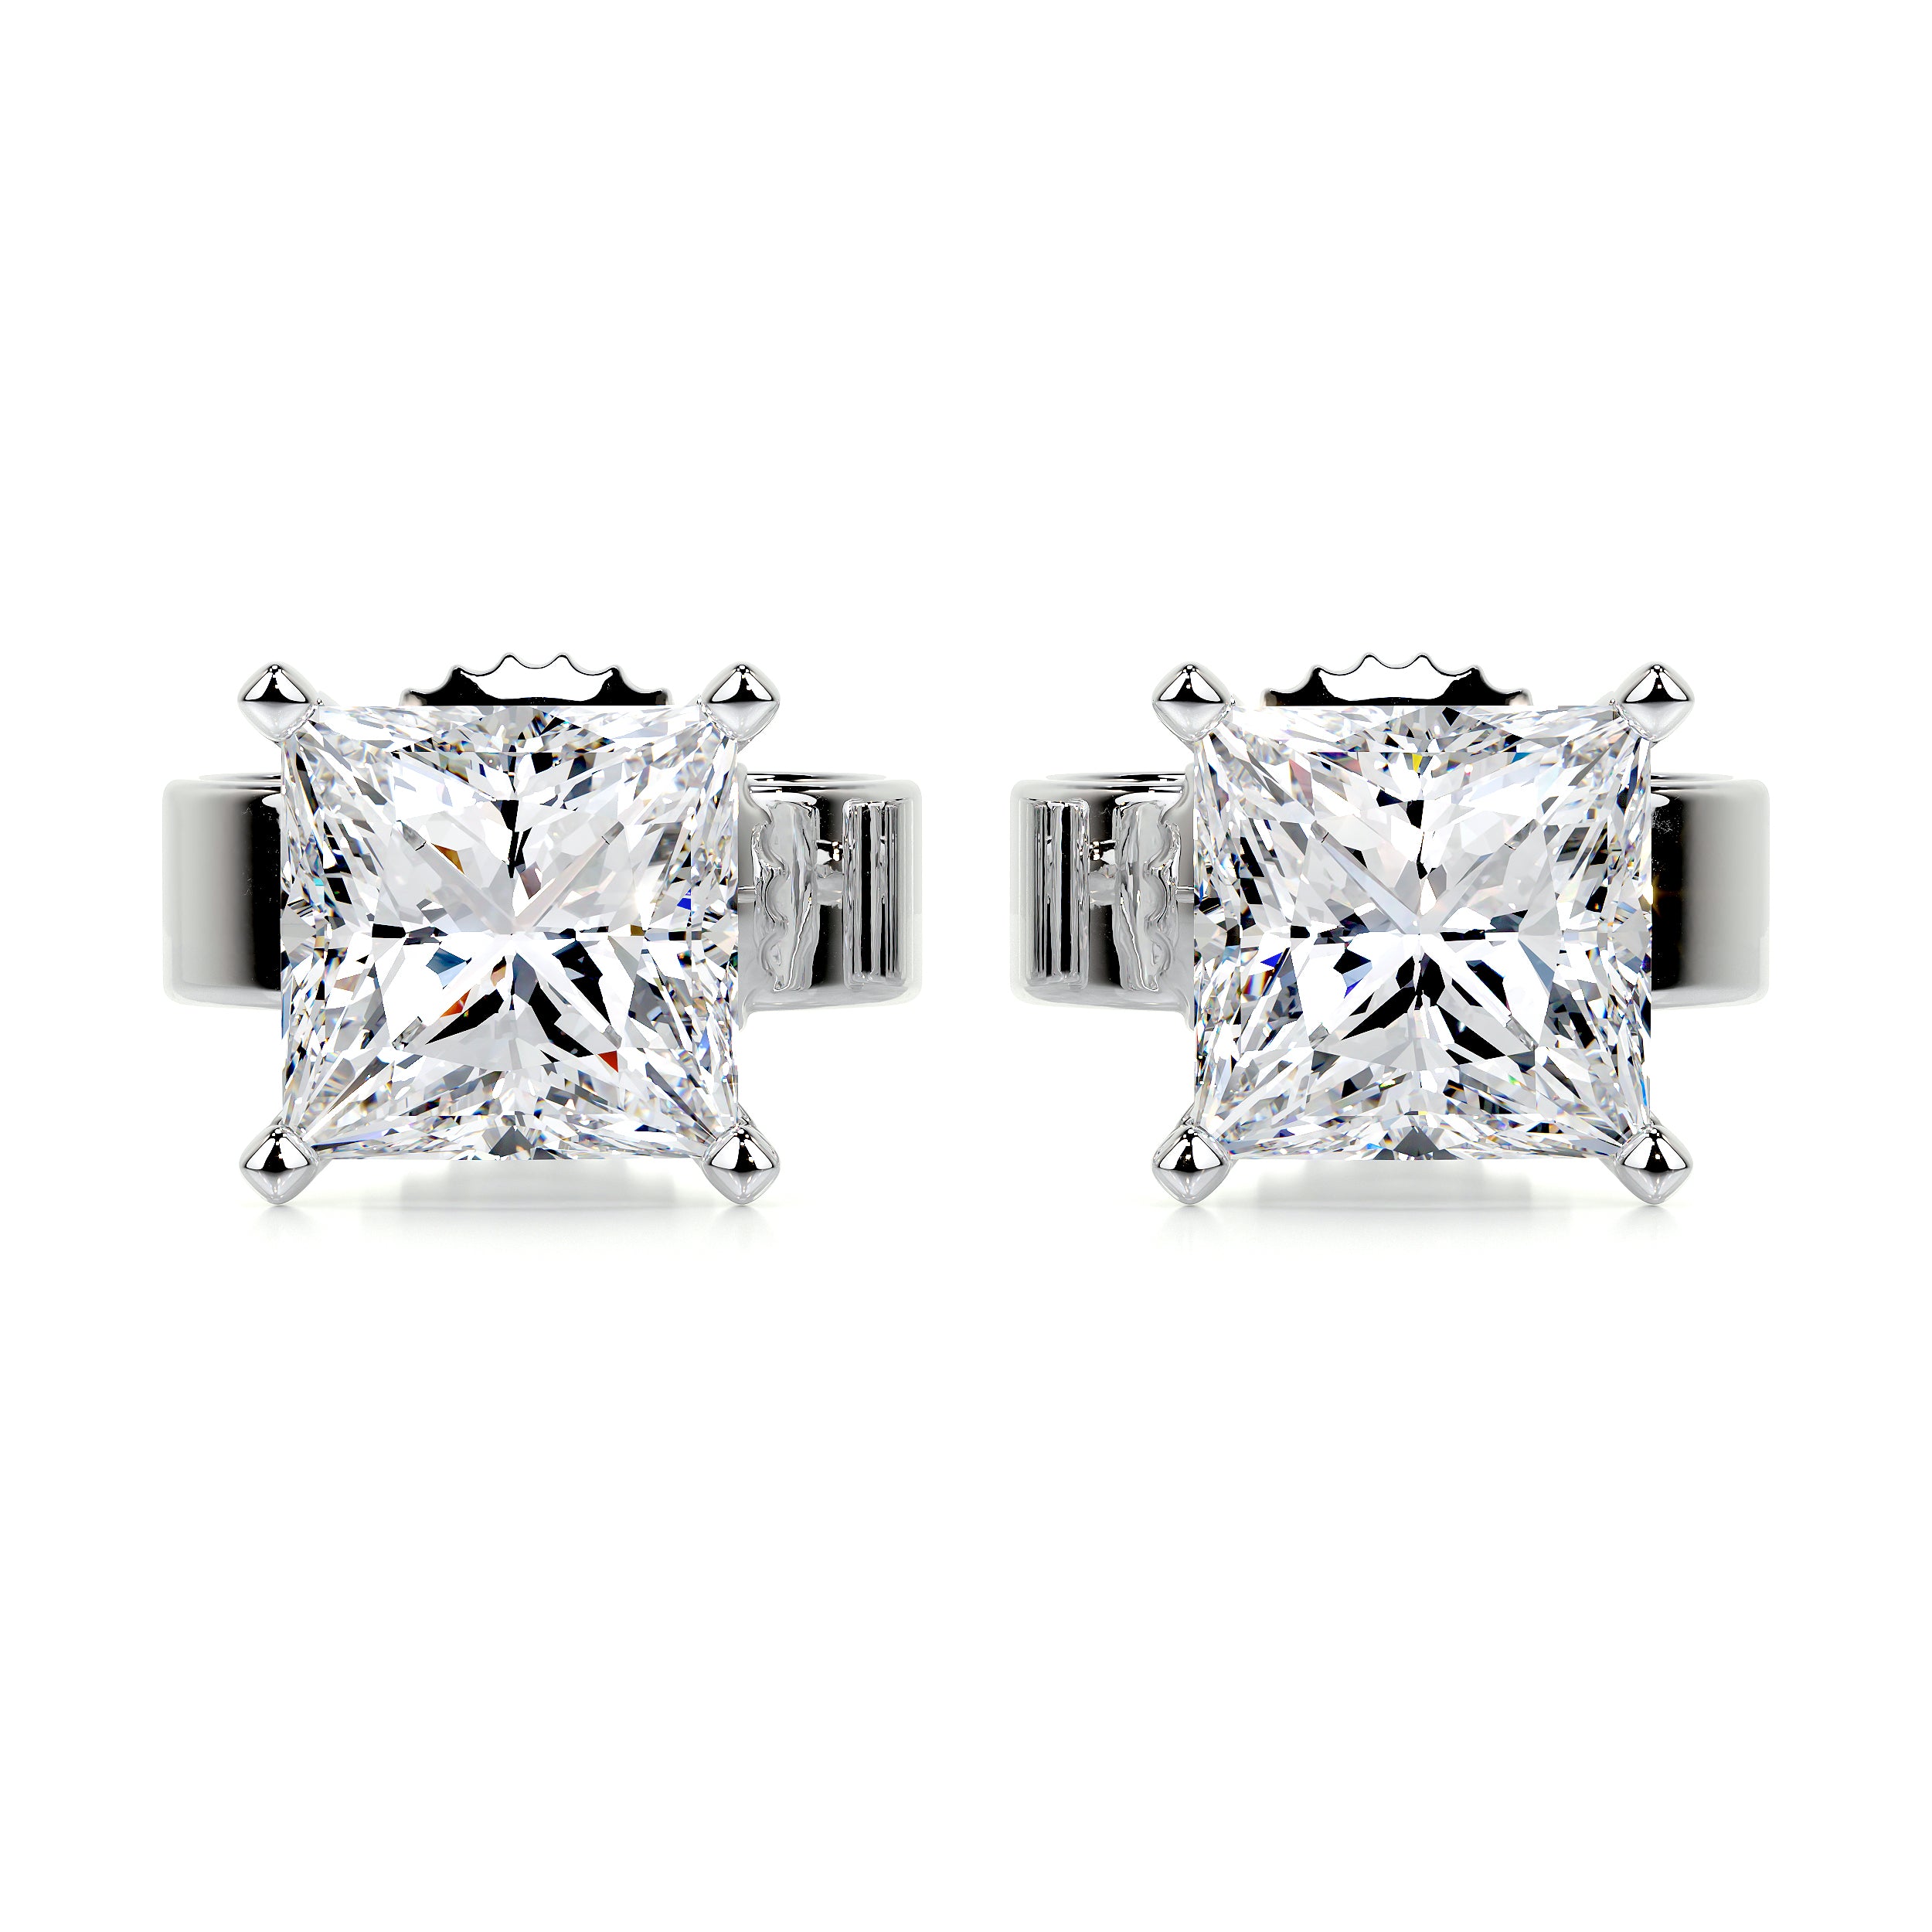 Jamie Diamond Earrings   (4 Carat) -14K White Gold